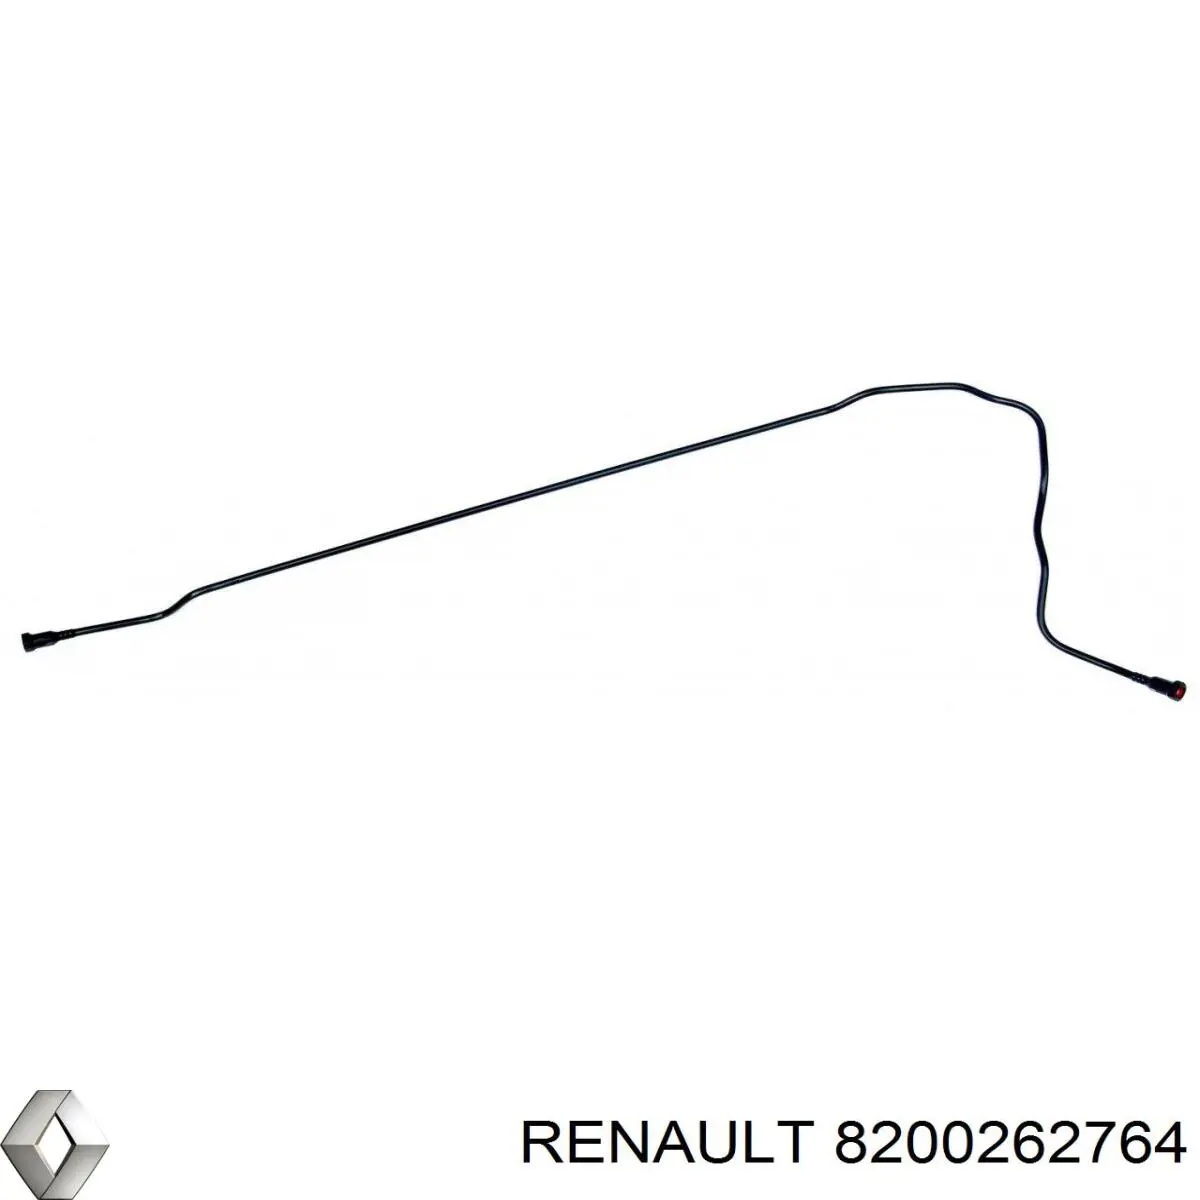 8200262764 Renault (RVI) tubo de combustible, filtro hasta la bomba